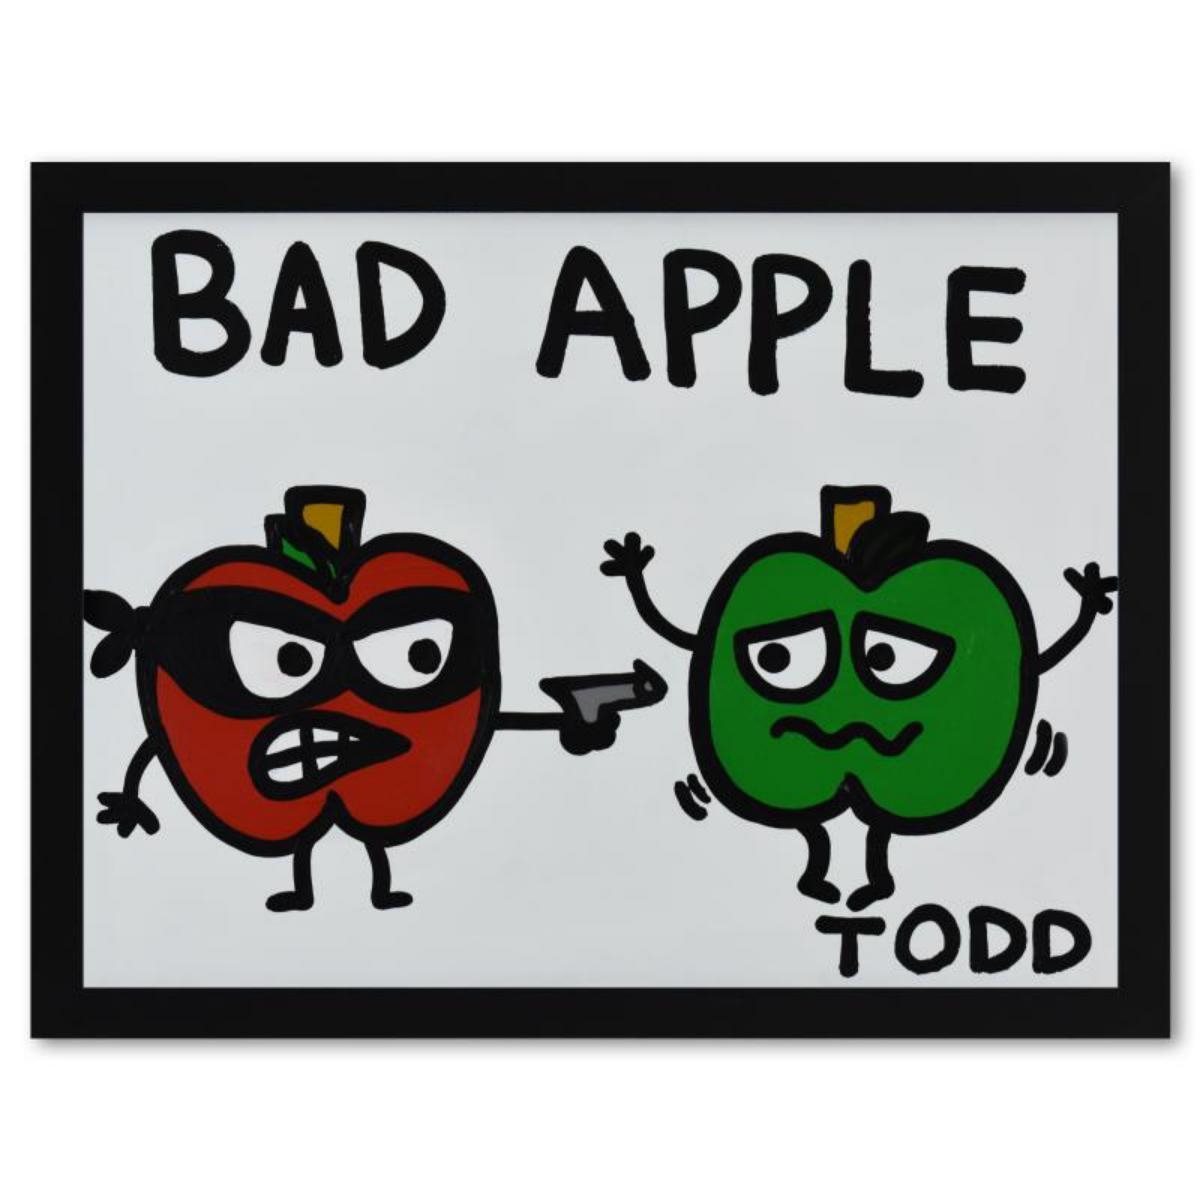 Bad Apple - Todd Goldman